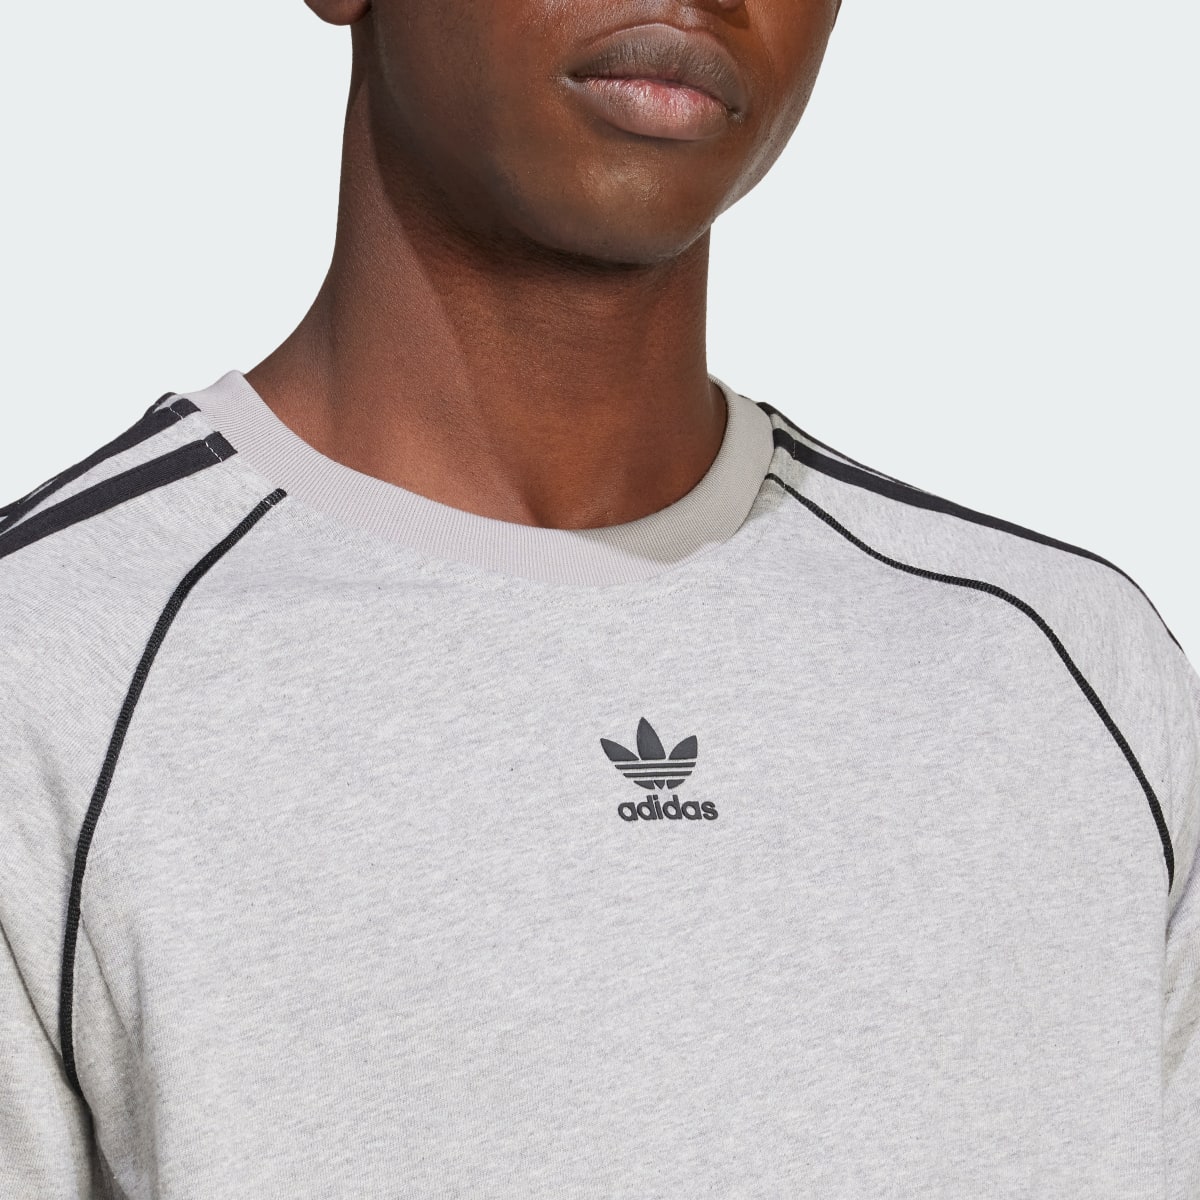 Adidas SST T-Shirt. 6